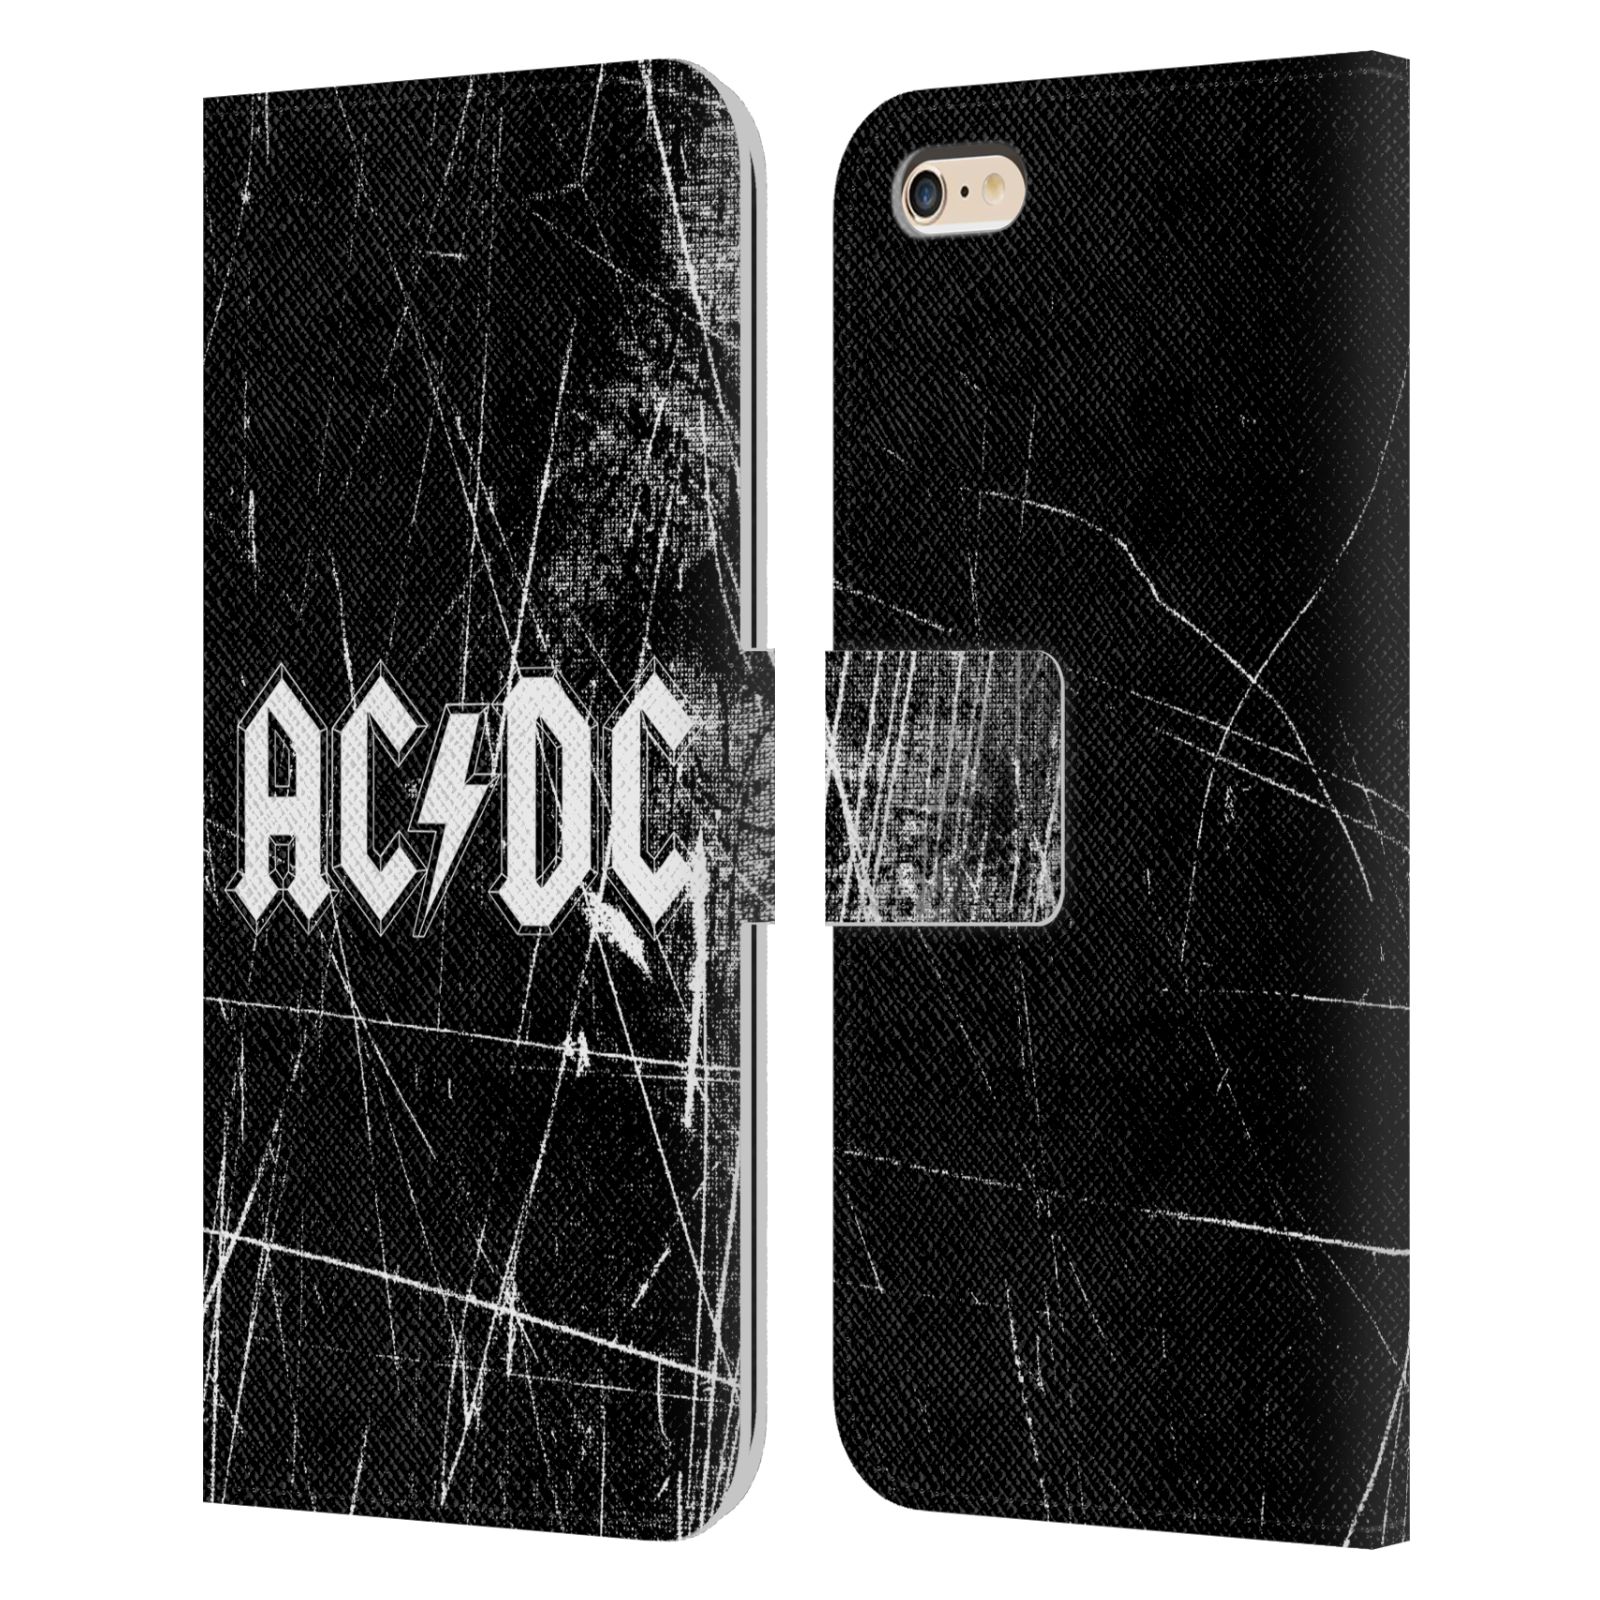 Pouzdro na mobil Apple Iphone 6 PLUS / 6S PLUS - HEAD CASE - Rocková skupin ACDC - černobílý nadpis